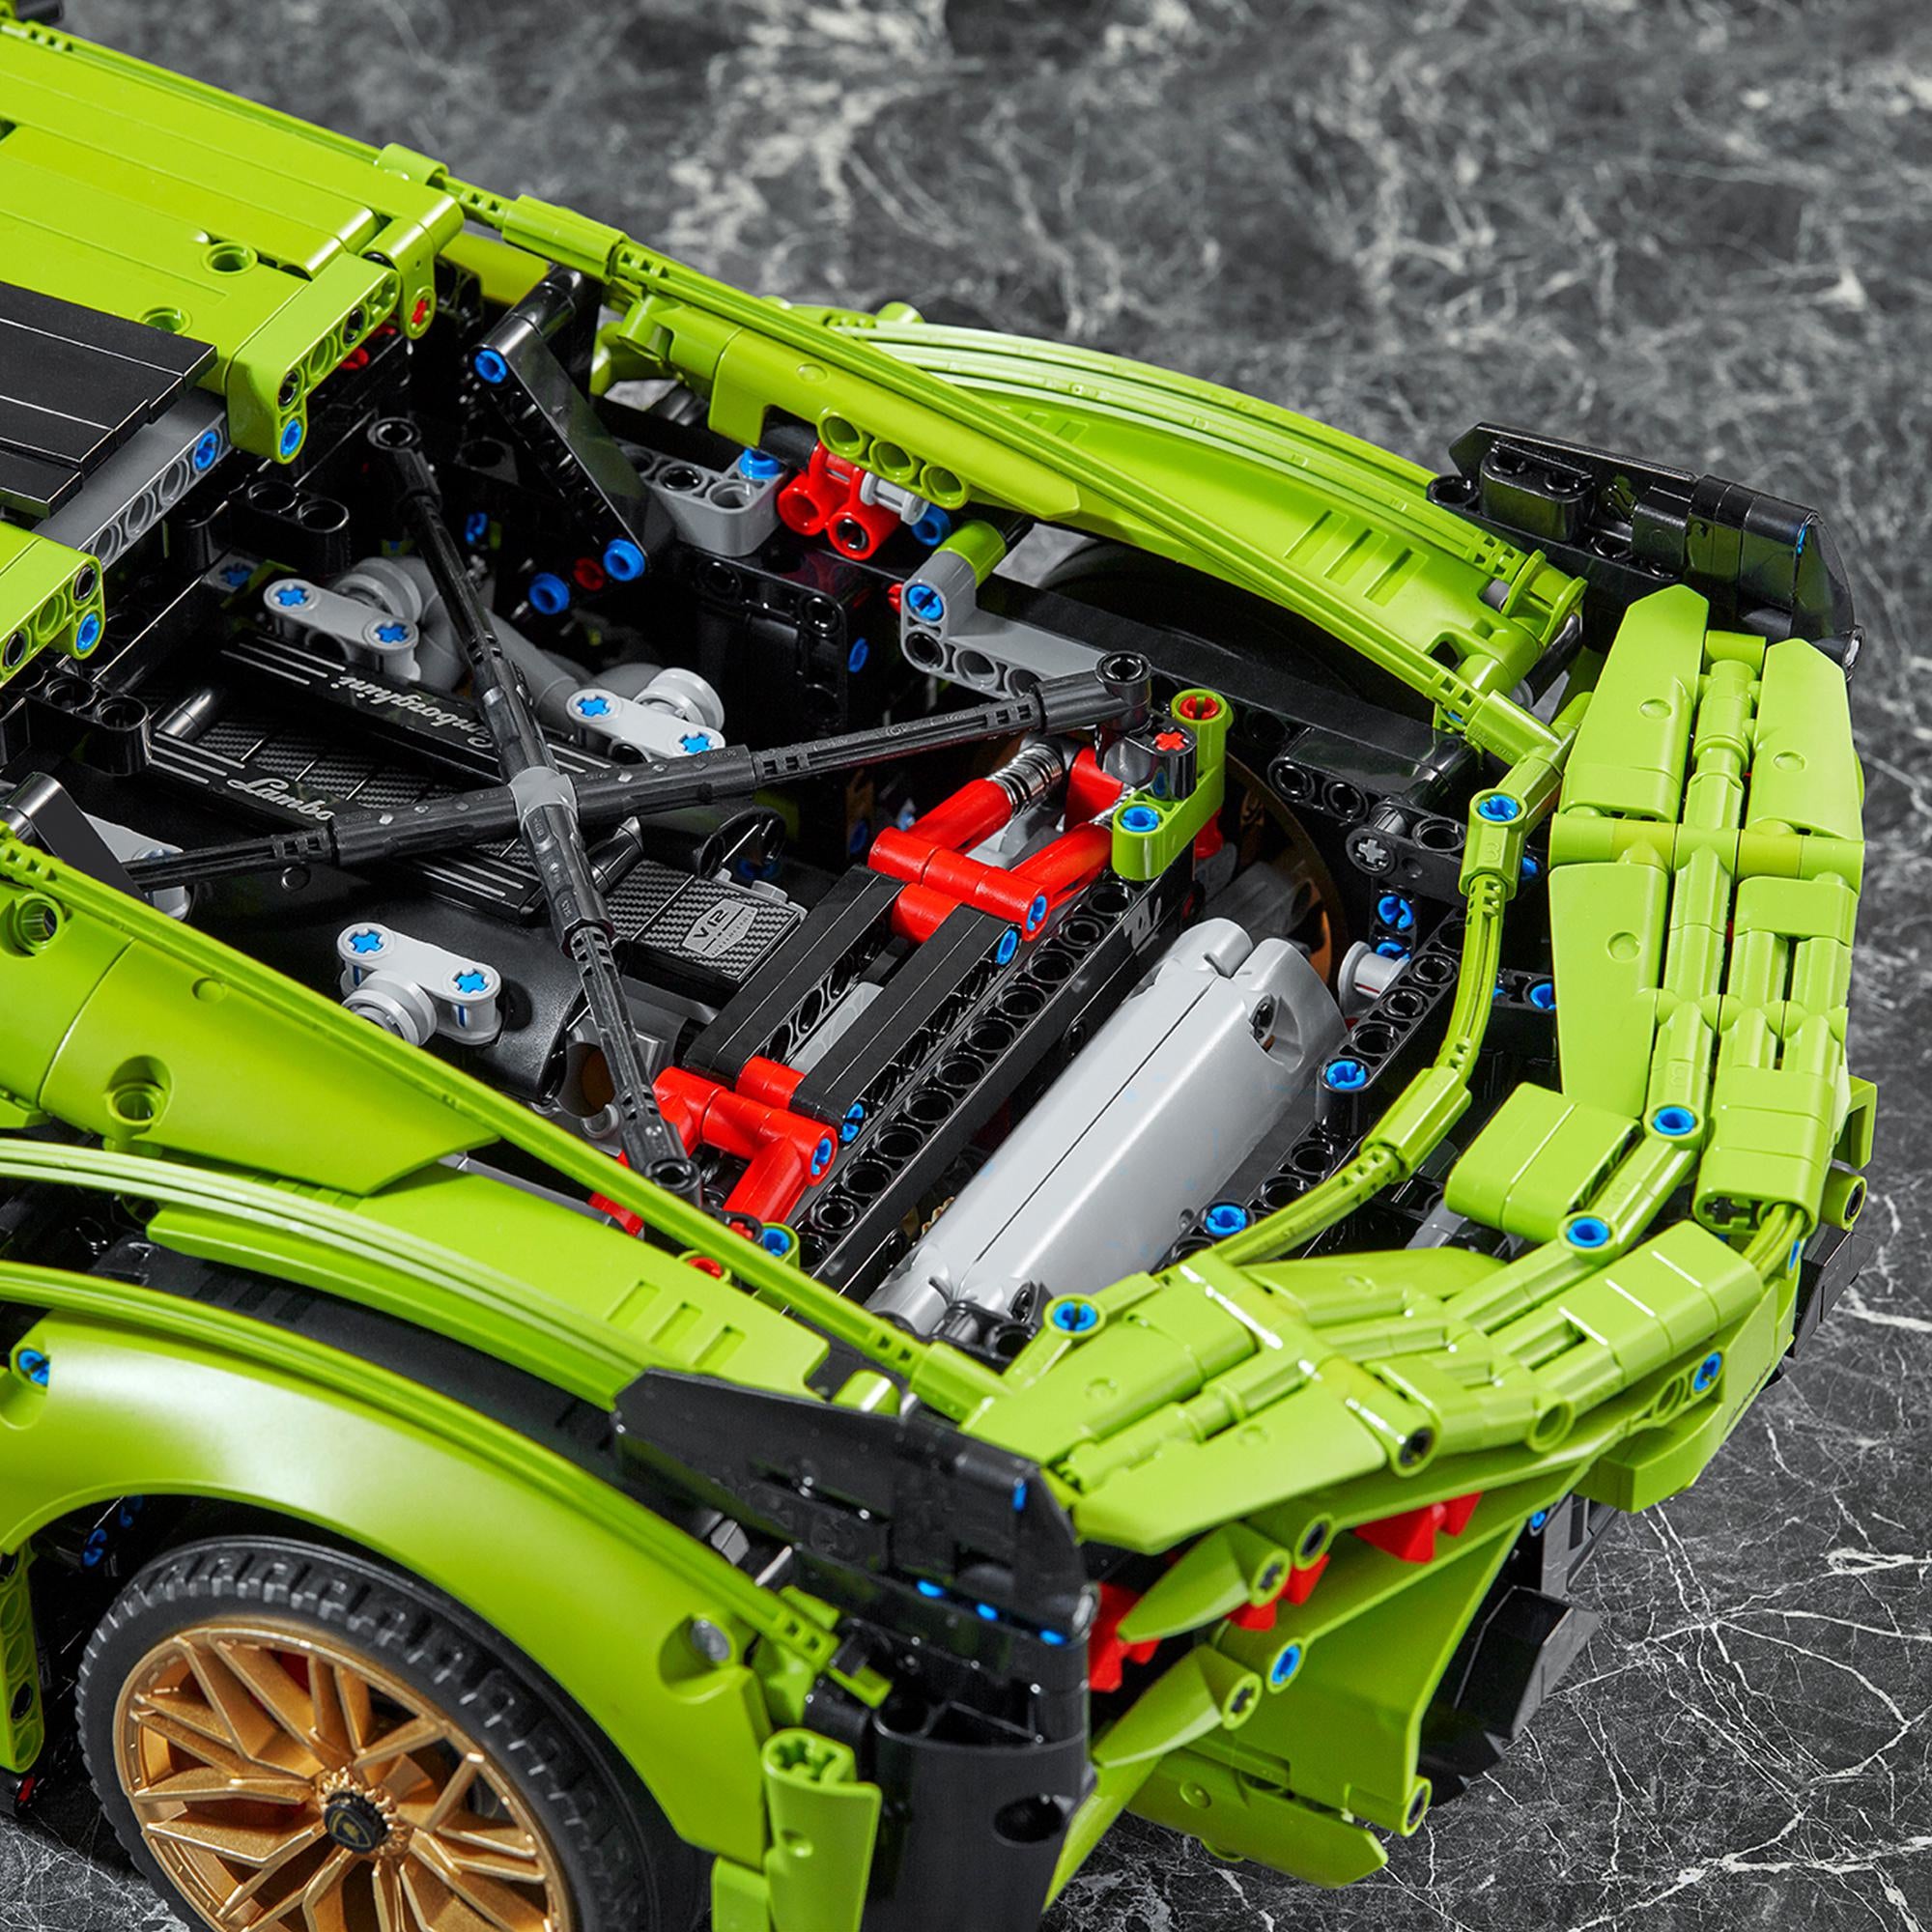 42115 LEGO® Technic - Lamborghini Sin FKP 37